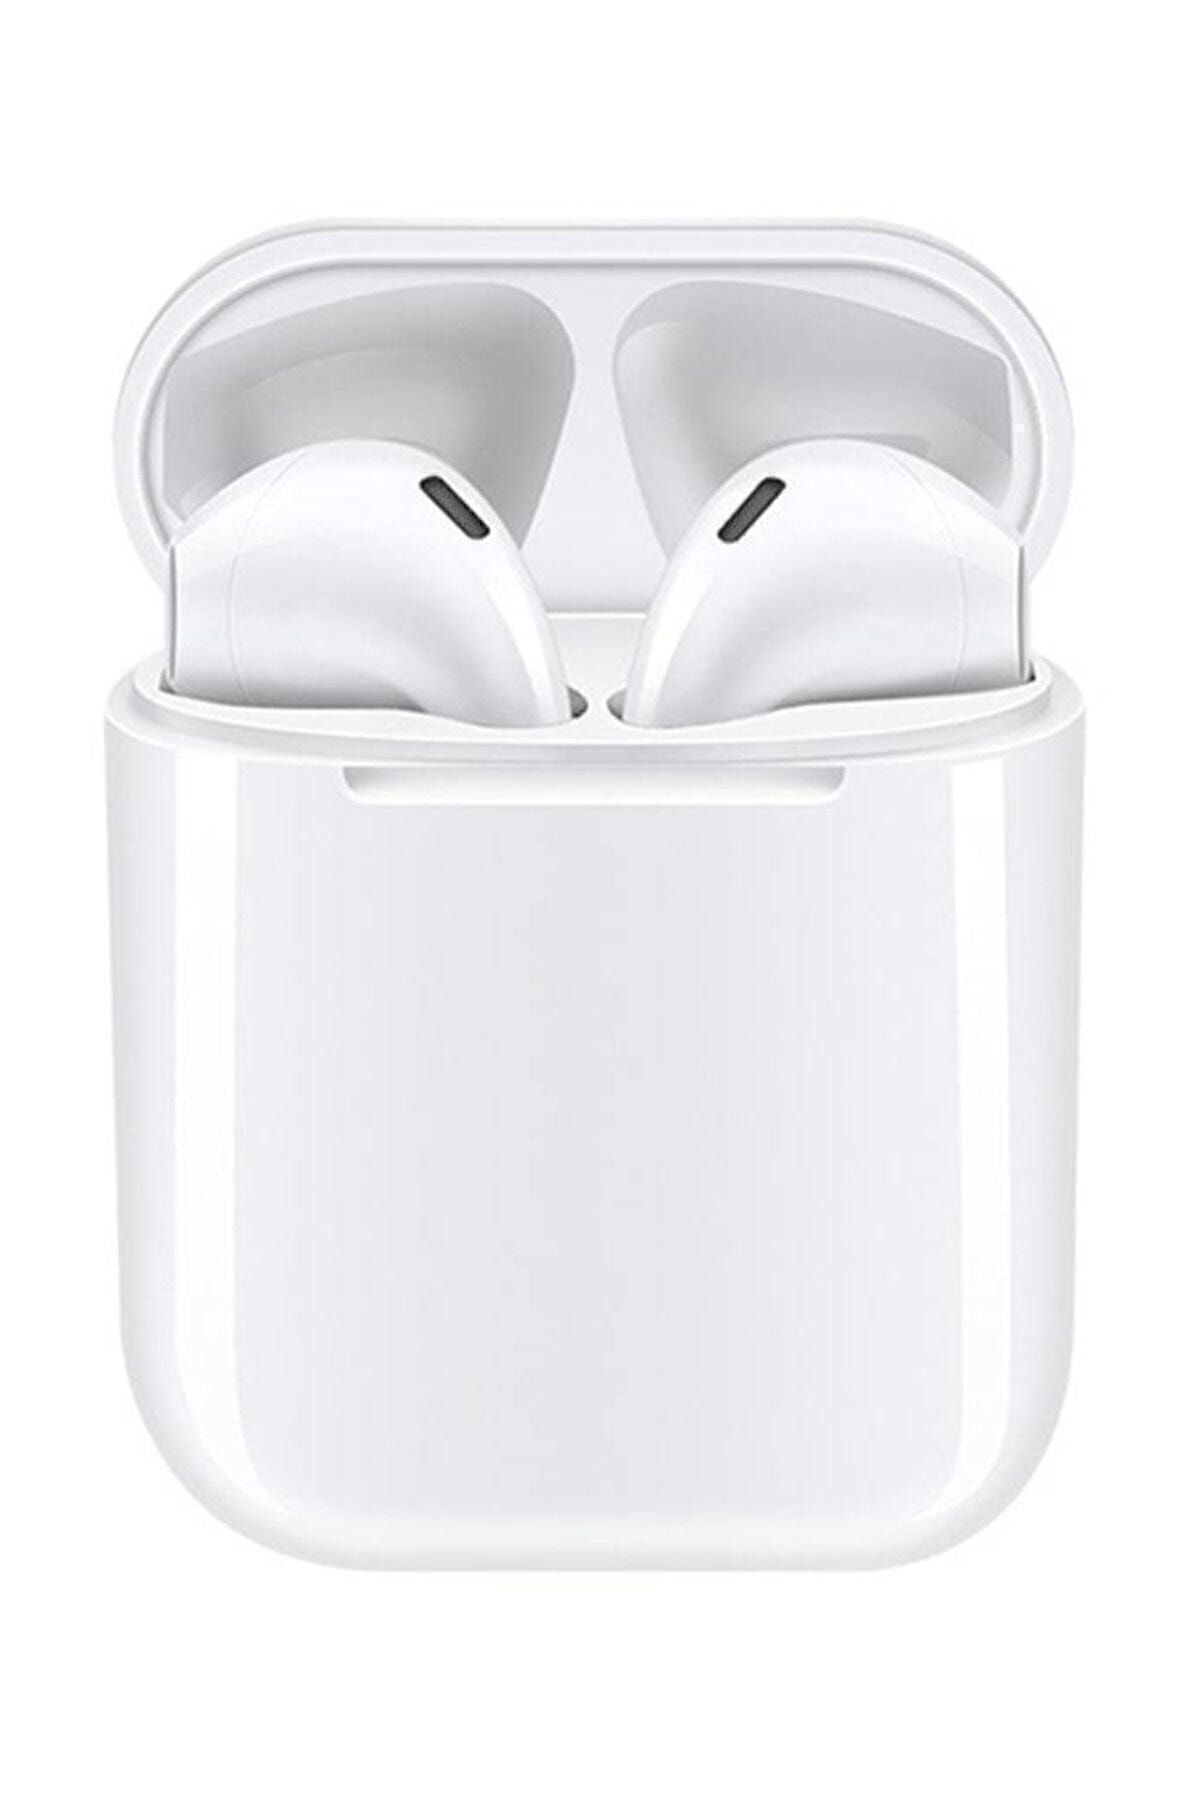 BİG STAR Airpods I12 Beyaz Iphone Android Uyumlu Universal Bluetooth Kulaklık Hd Ses Kalitesi